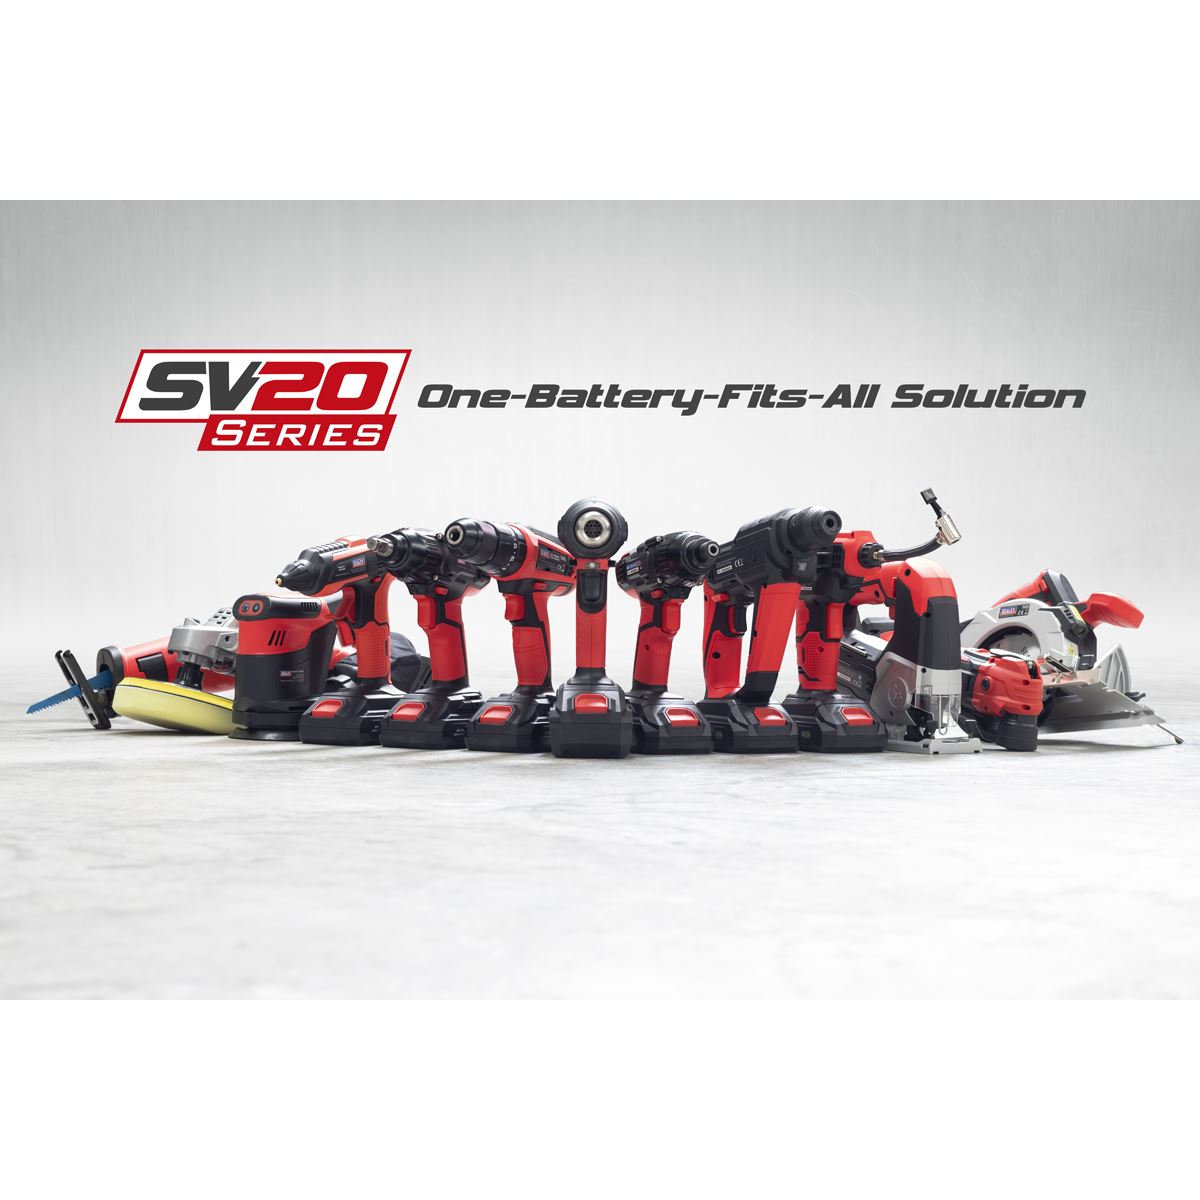 Sealey Cordless Chainsaw 25cm 20V SV20 Series Kit -  2 Batteries